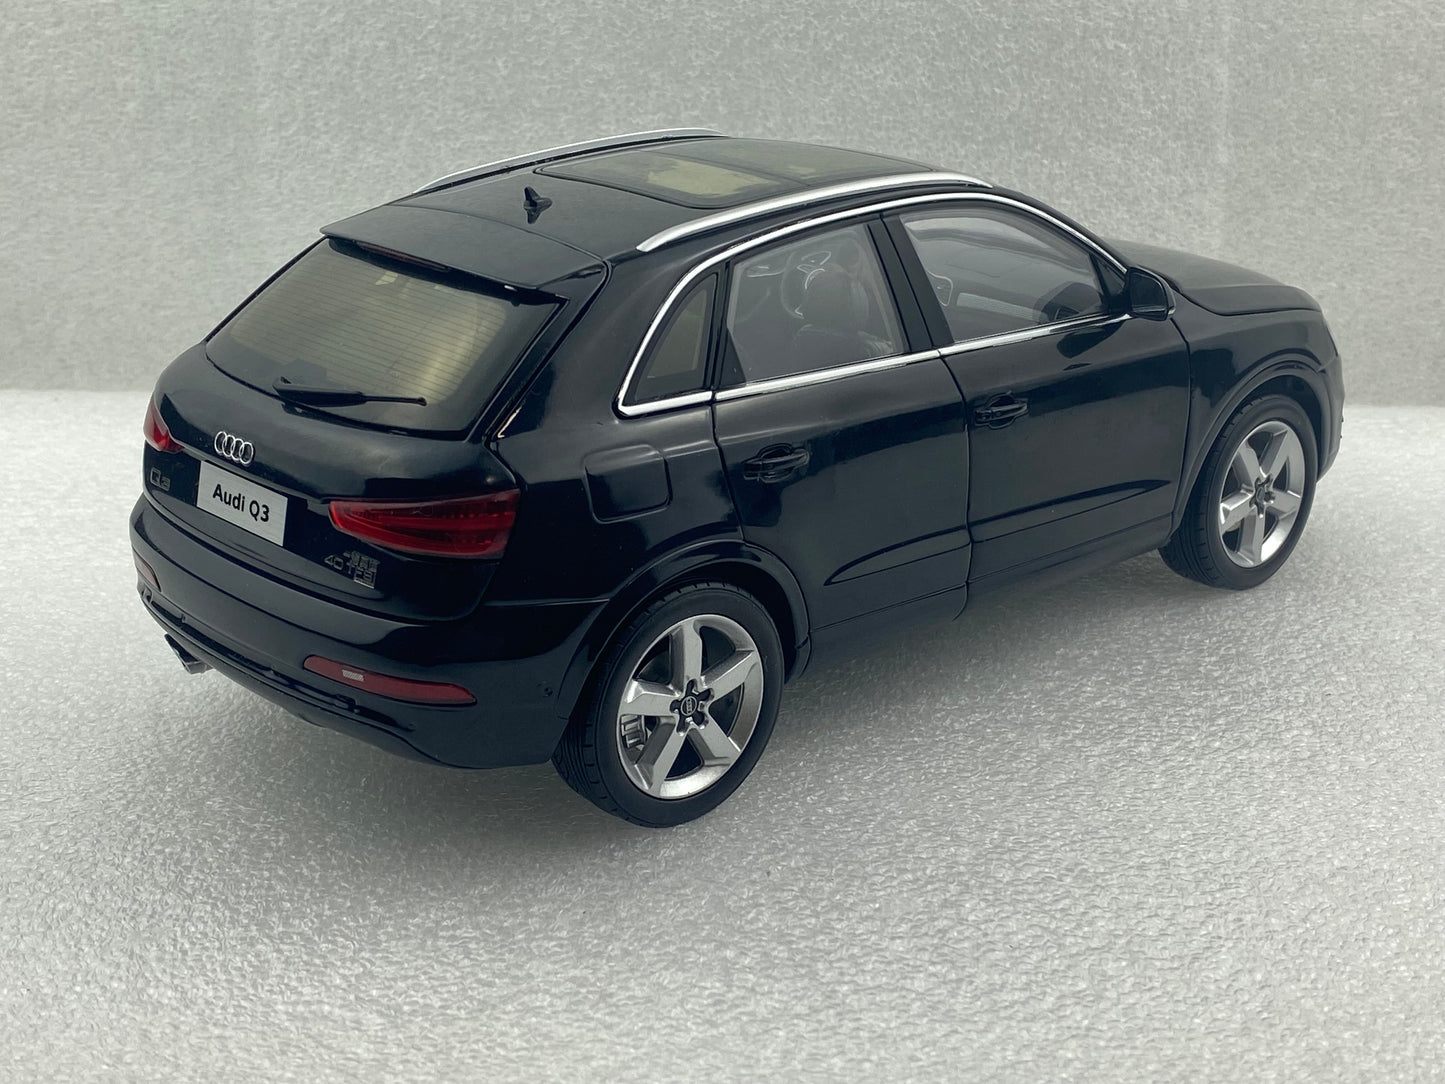 1:18 Audi Q3 4.0 TSFI Black Chinese version (Clearance Final Sale)